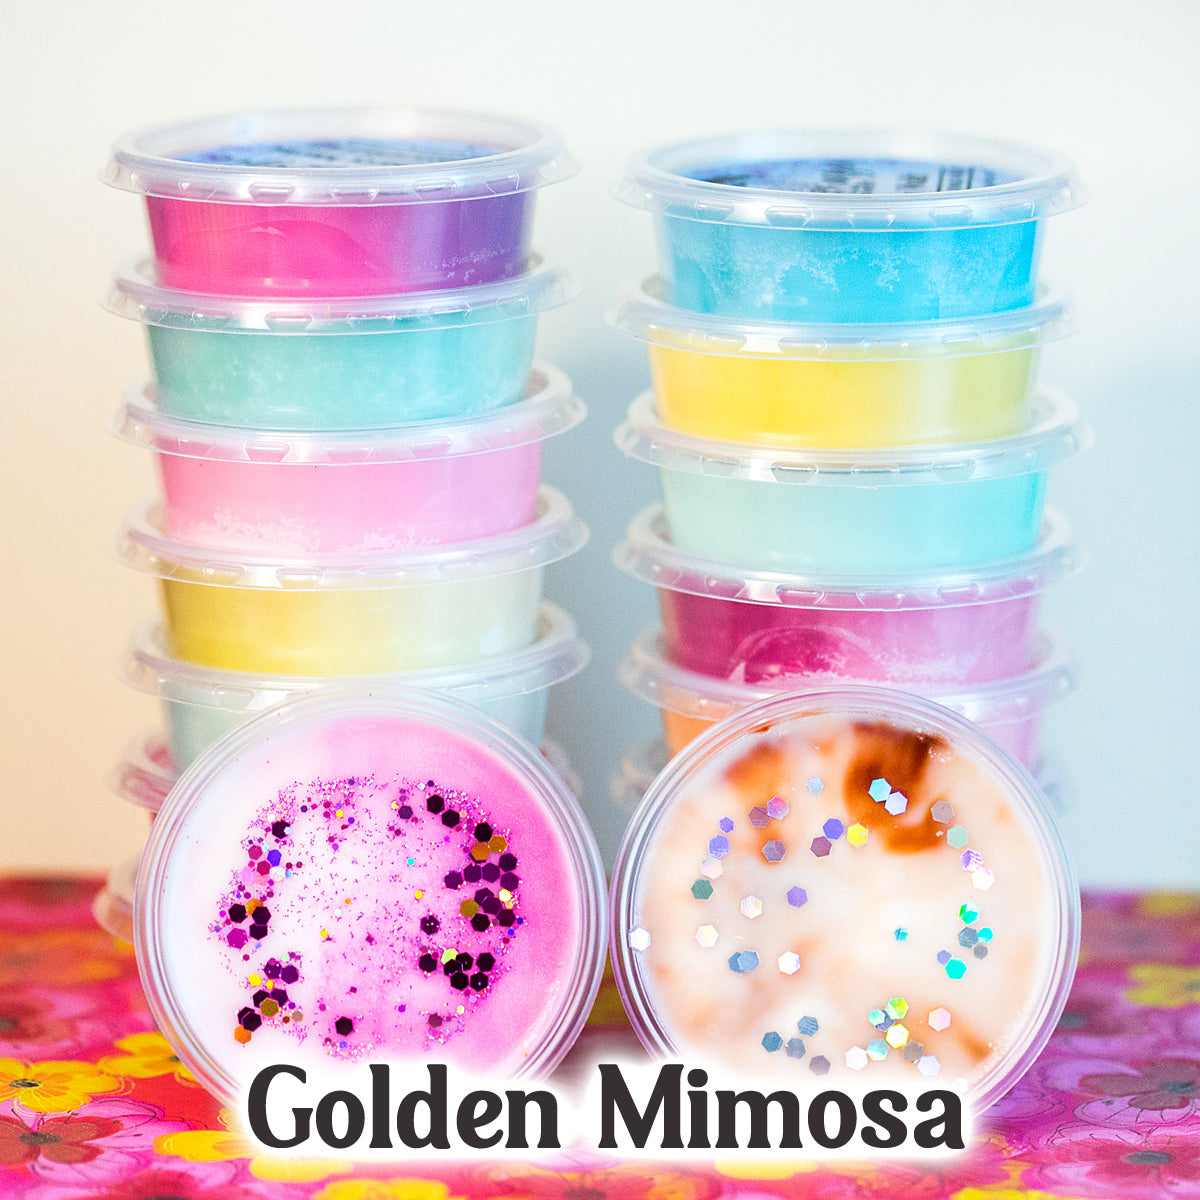 Golden Mimosa - Wachs Melt Scent Cup